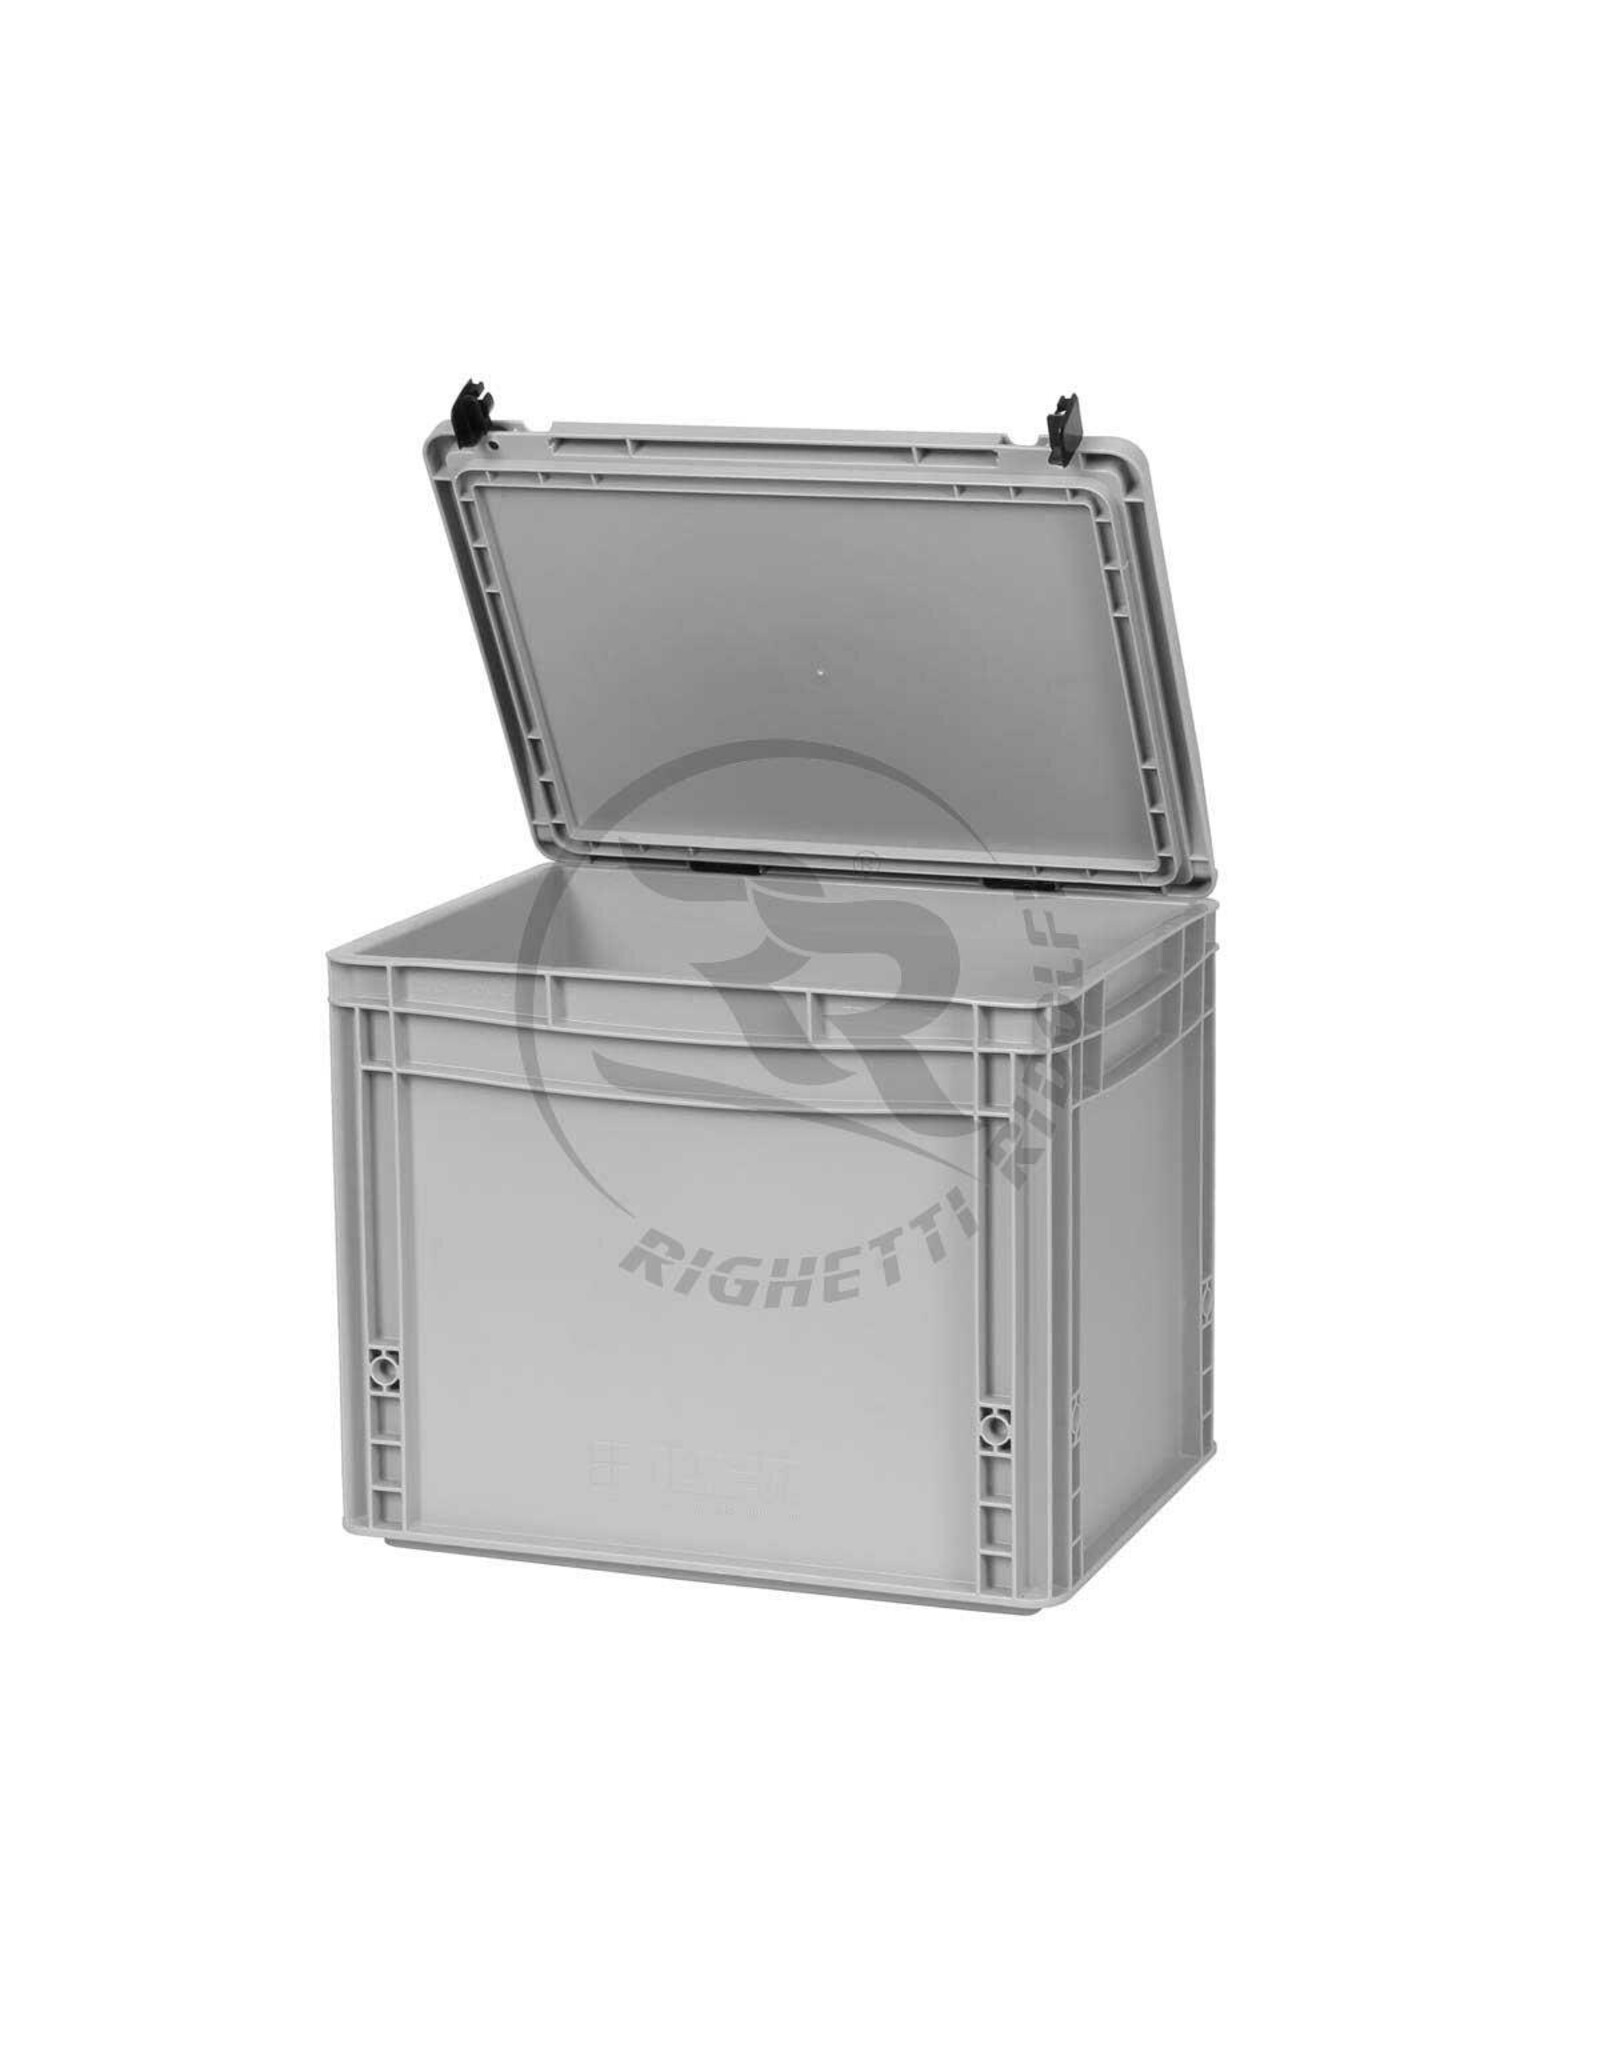 Righetti Ridolfi RR Plastic stackable Container Inside size 37x27x19.7cm